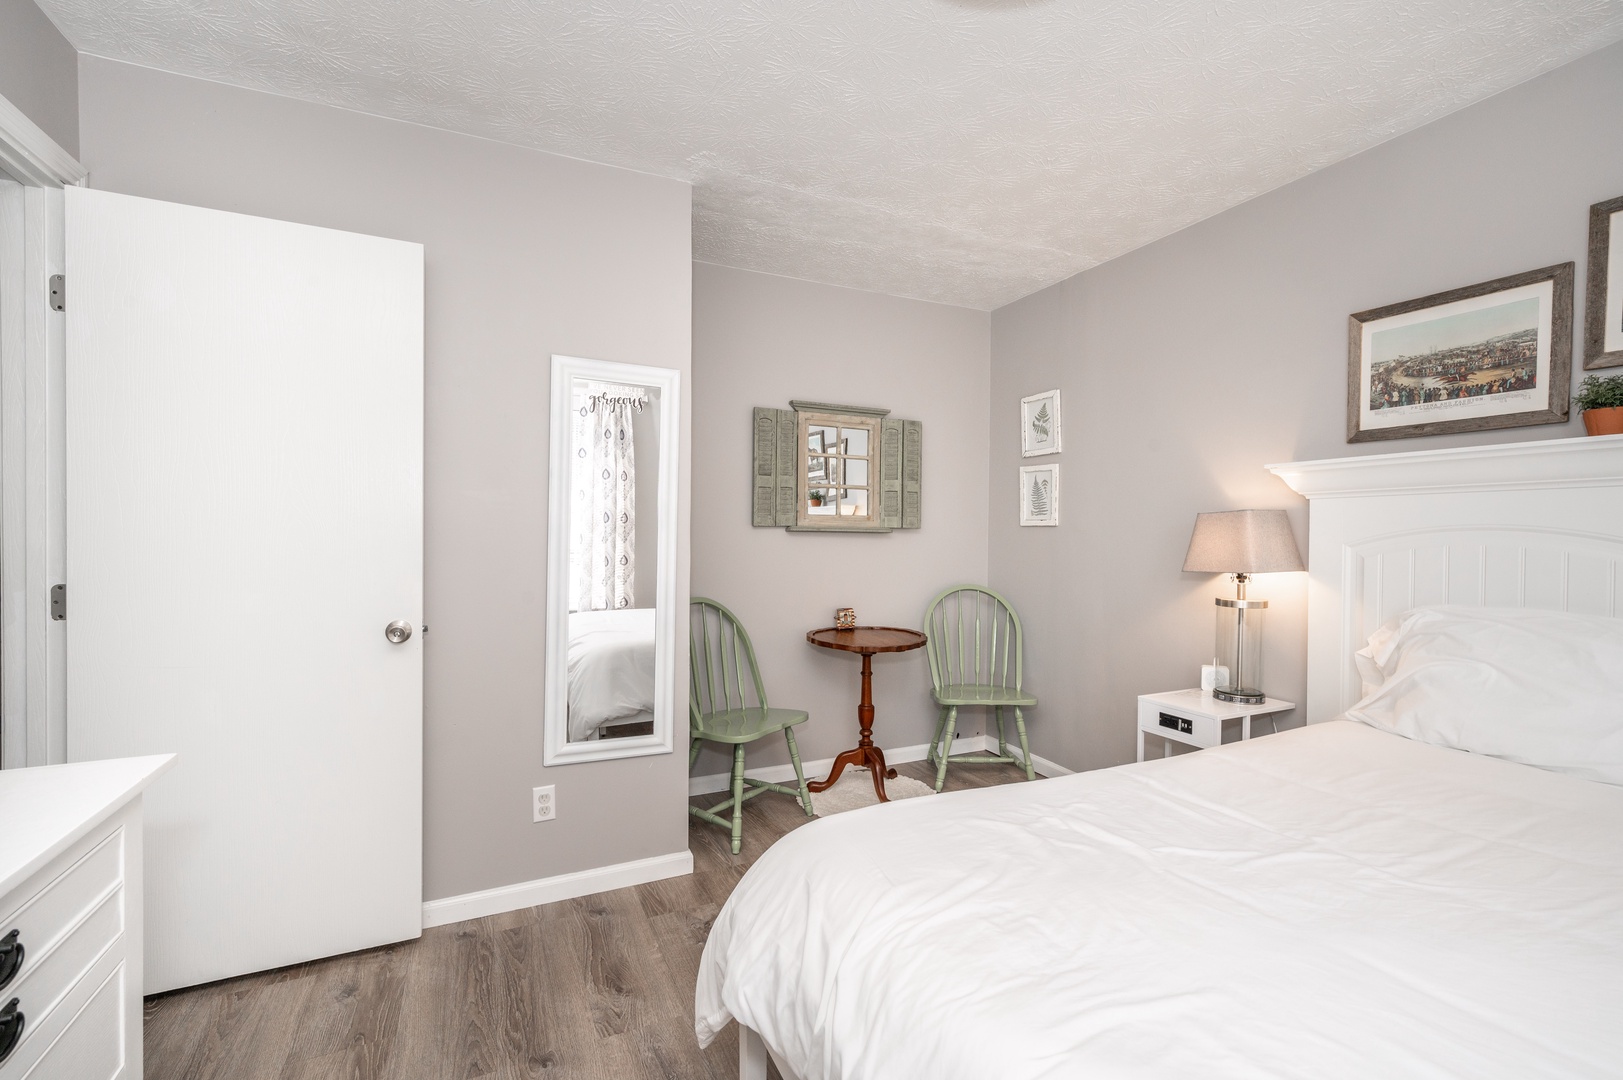 The final bedroom sanctuary includes a queen bed & Smart TV